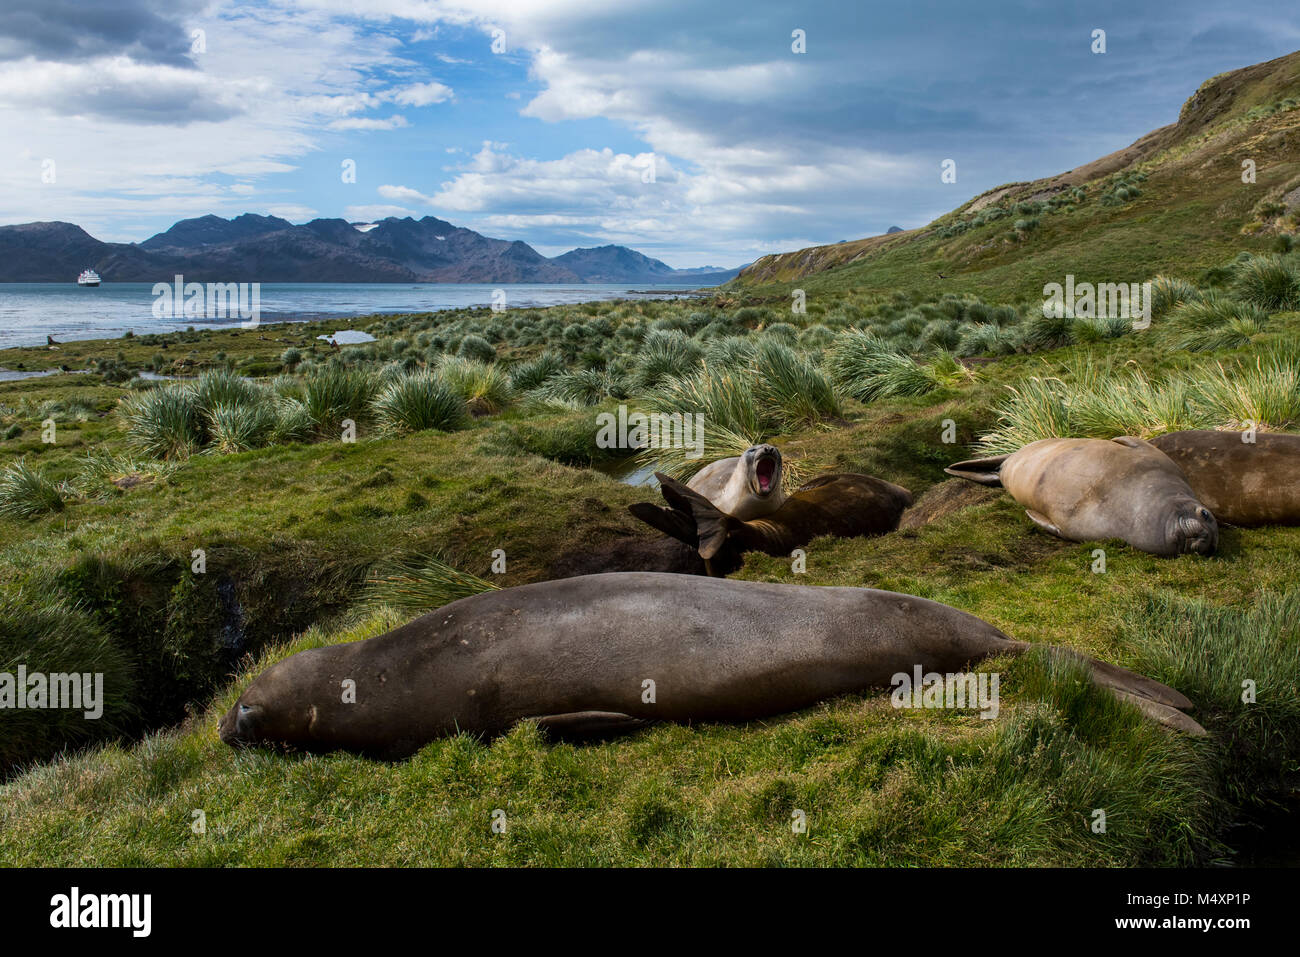 British territory, South Georgia, Grytviken. Female Southern elephant seals (Wild: Mirounga leonina) in tussock grass habitat with coastal view. Stock Photo